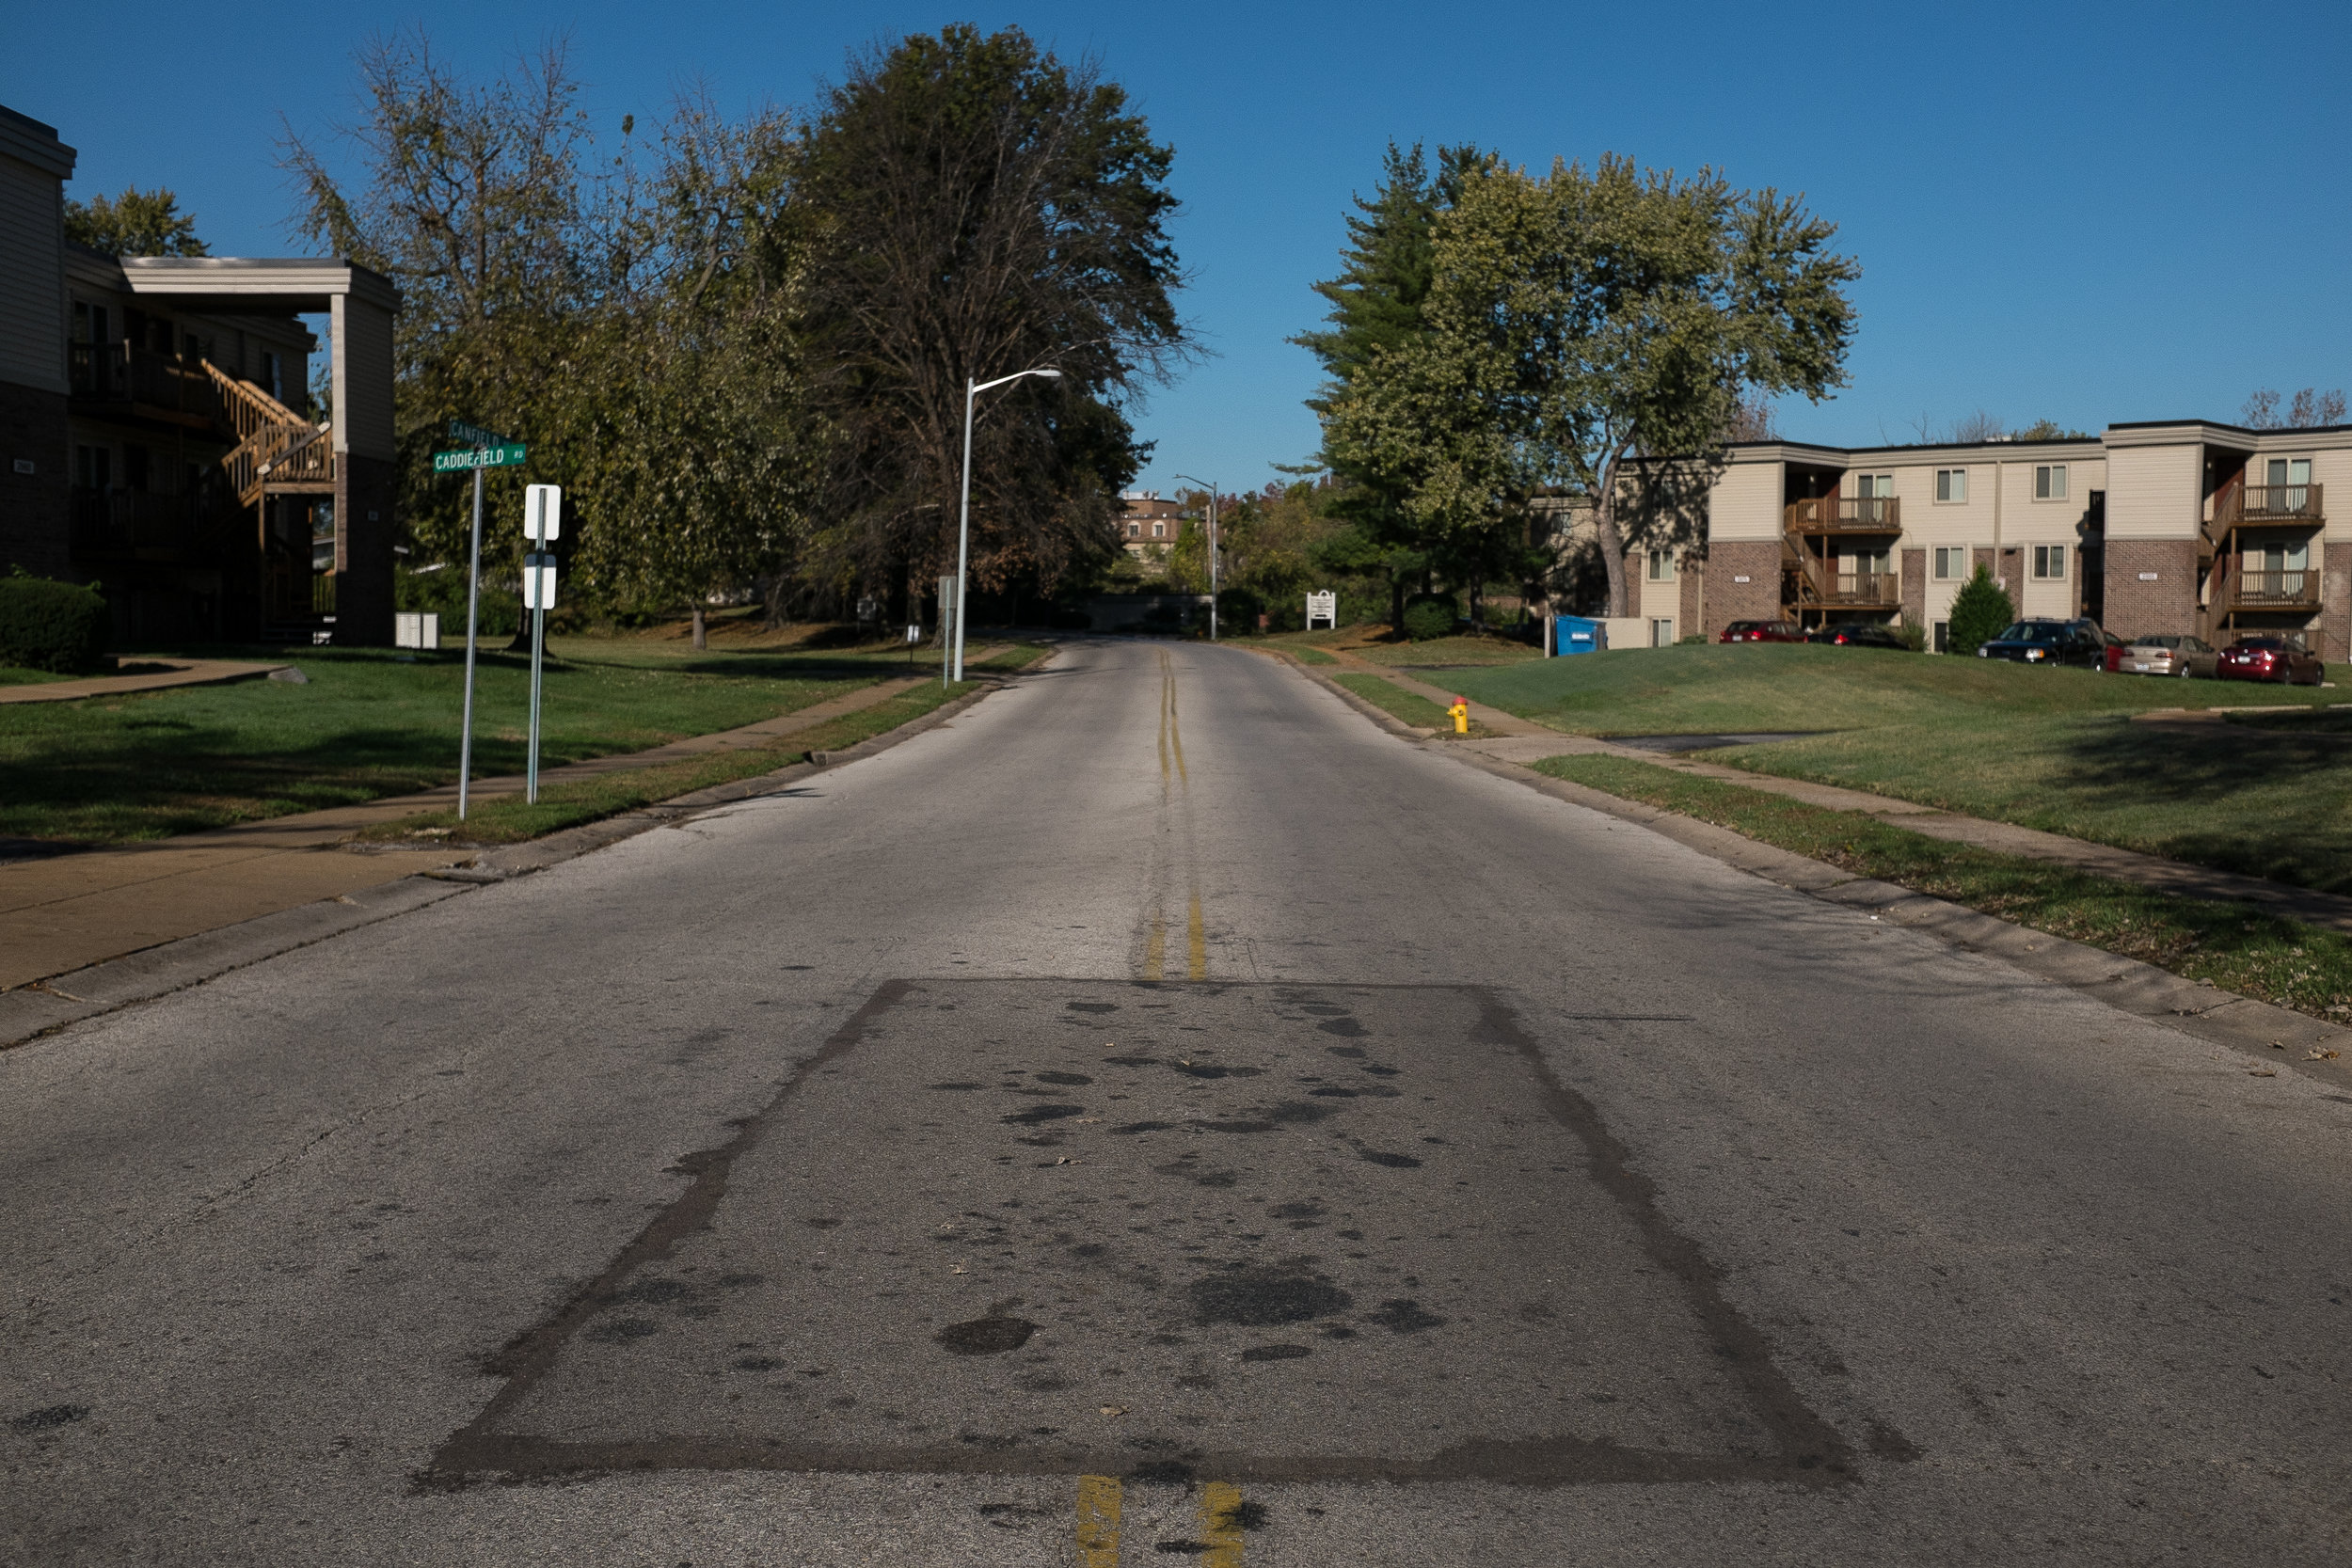  Canfield Drive, Ferguson Missouri, where Michael Brown was shot to death.  